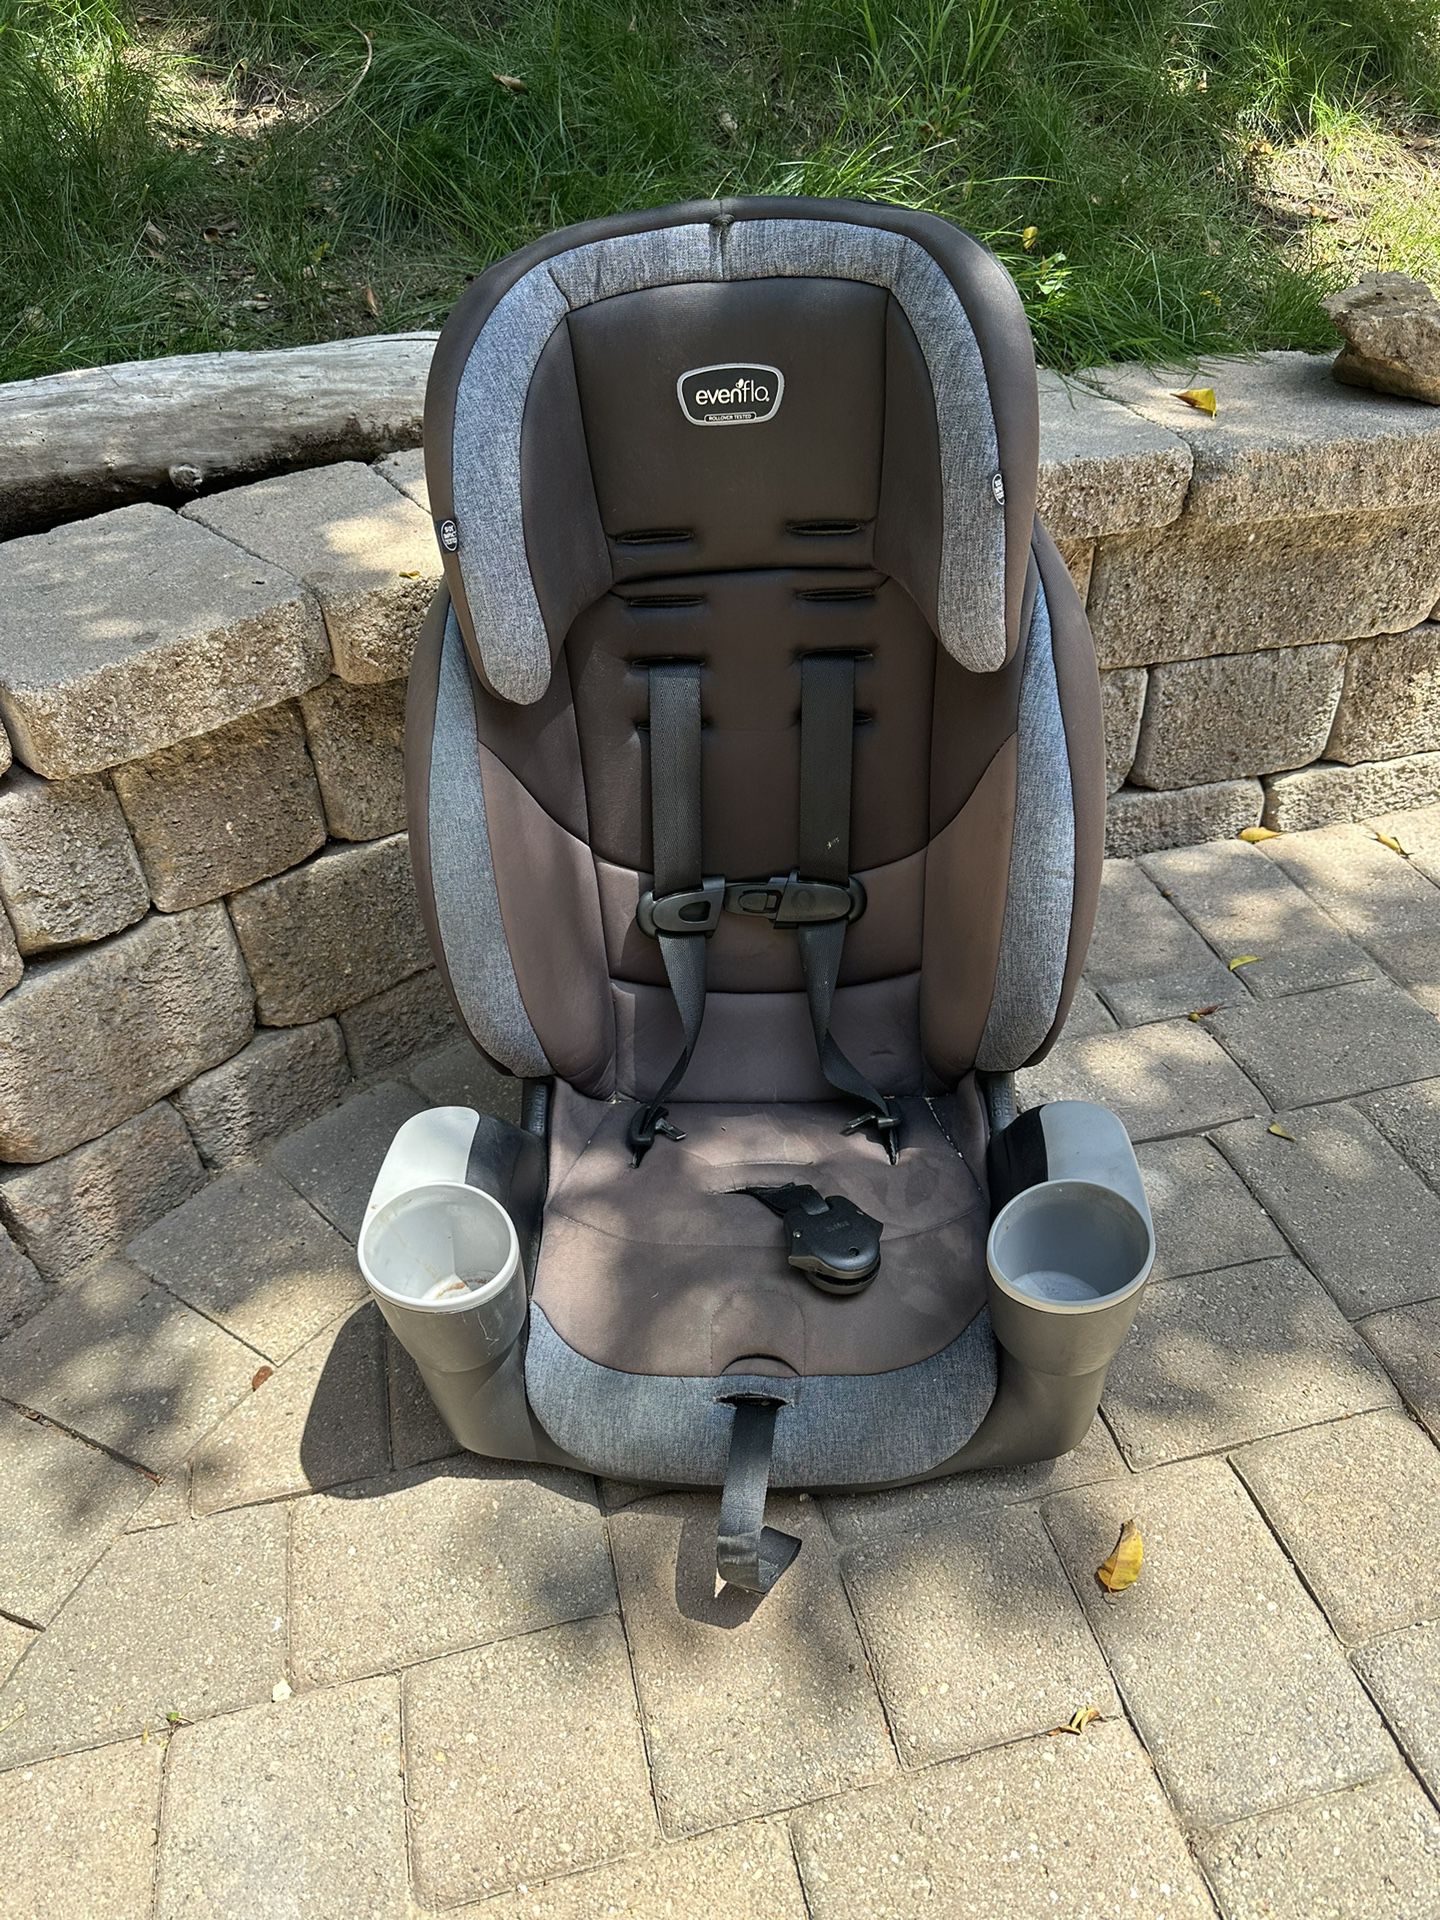 Evenflo Child Car seat